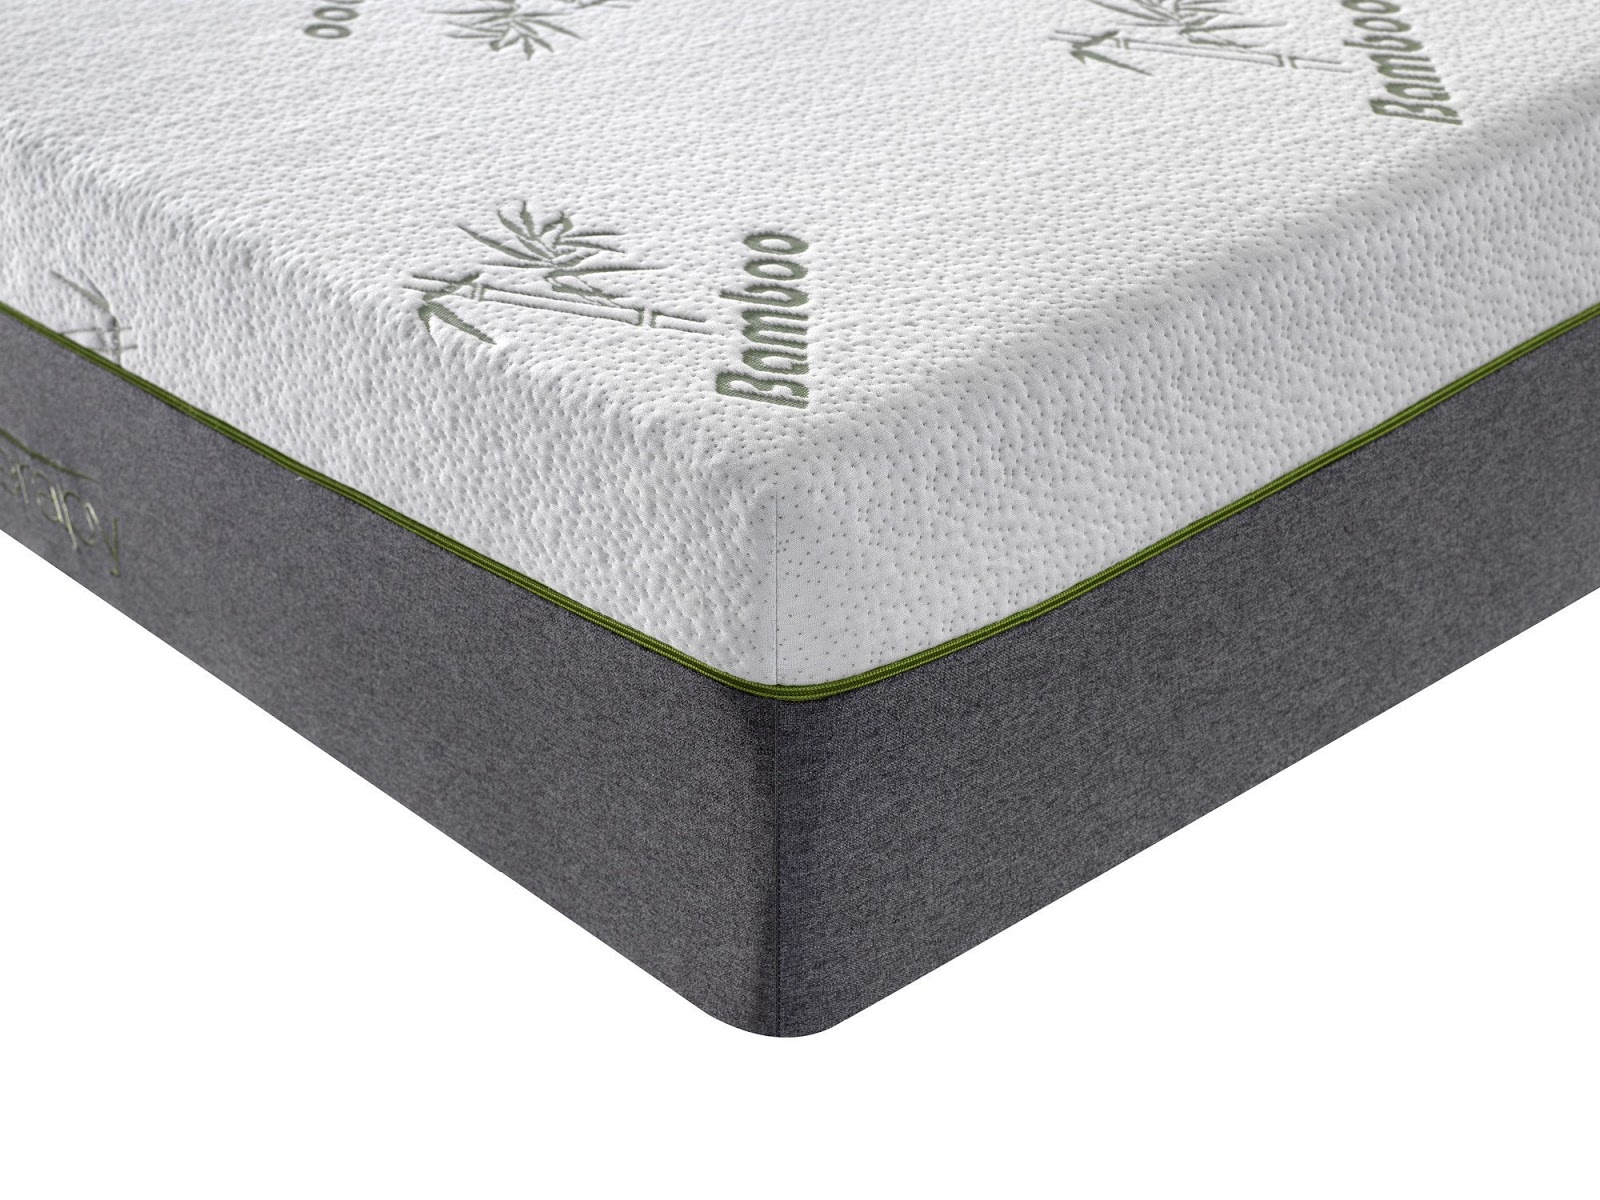 can you roll up a bamboo mattress